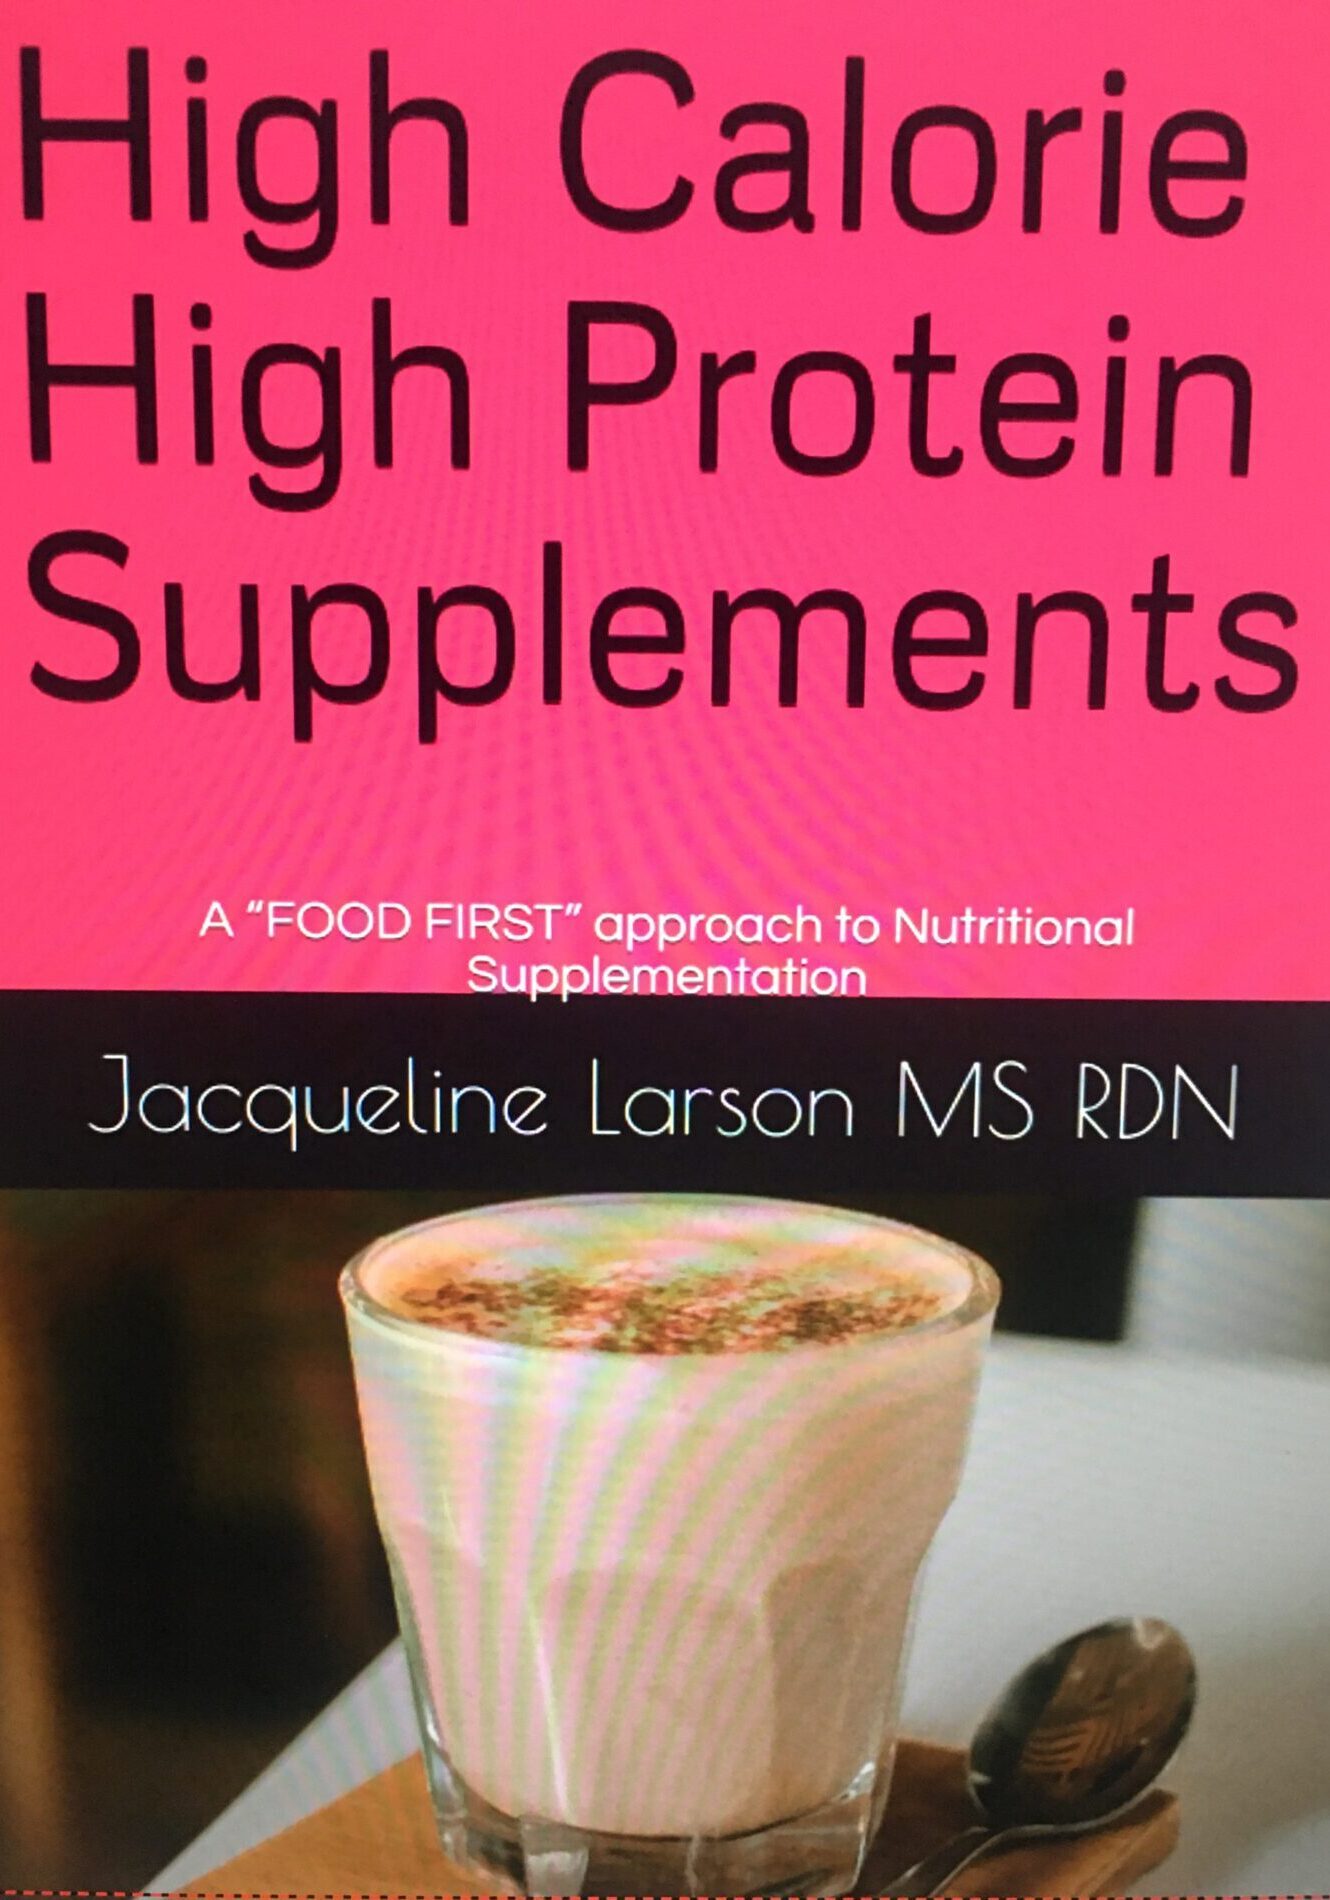 High Protein Supplements